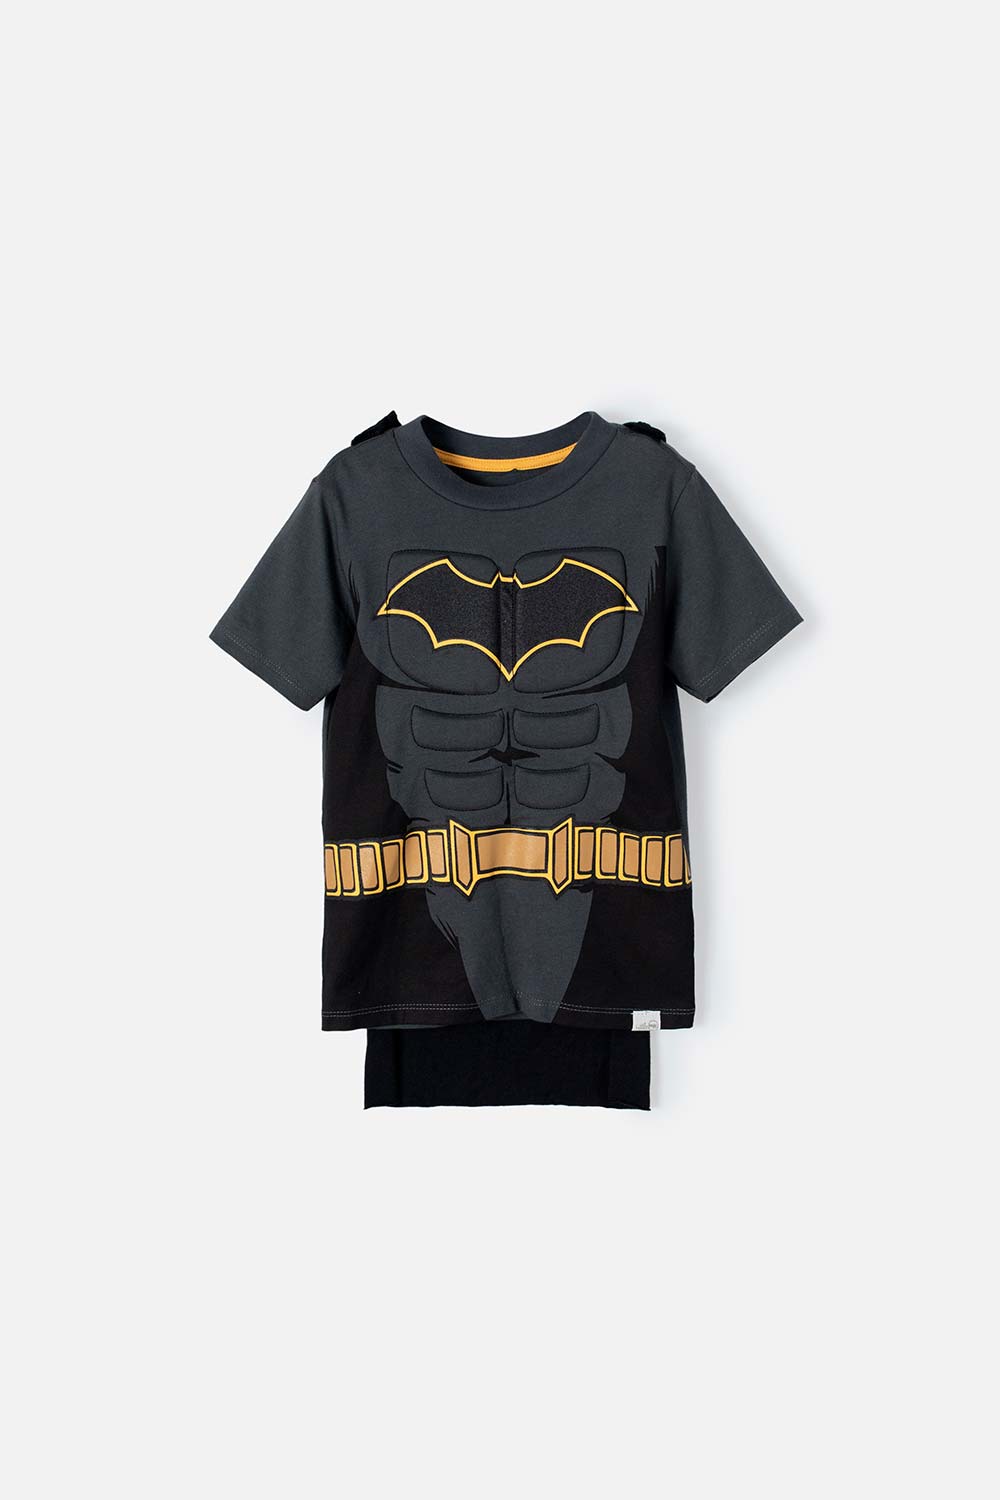 Camiseta de Batman con capa removible para niño de 2T a 5T 2T-0